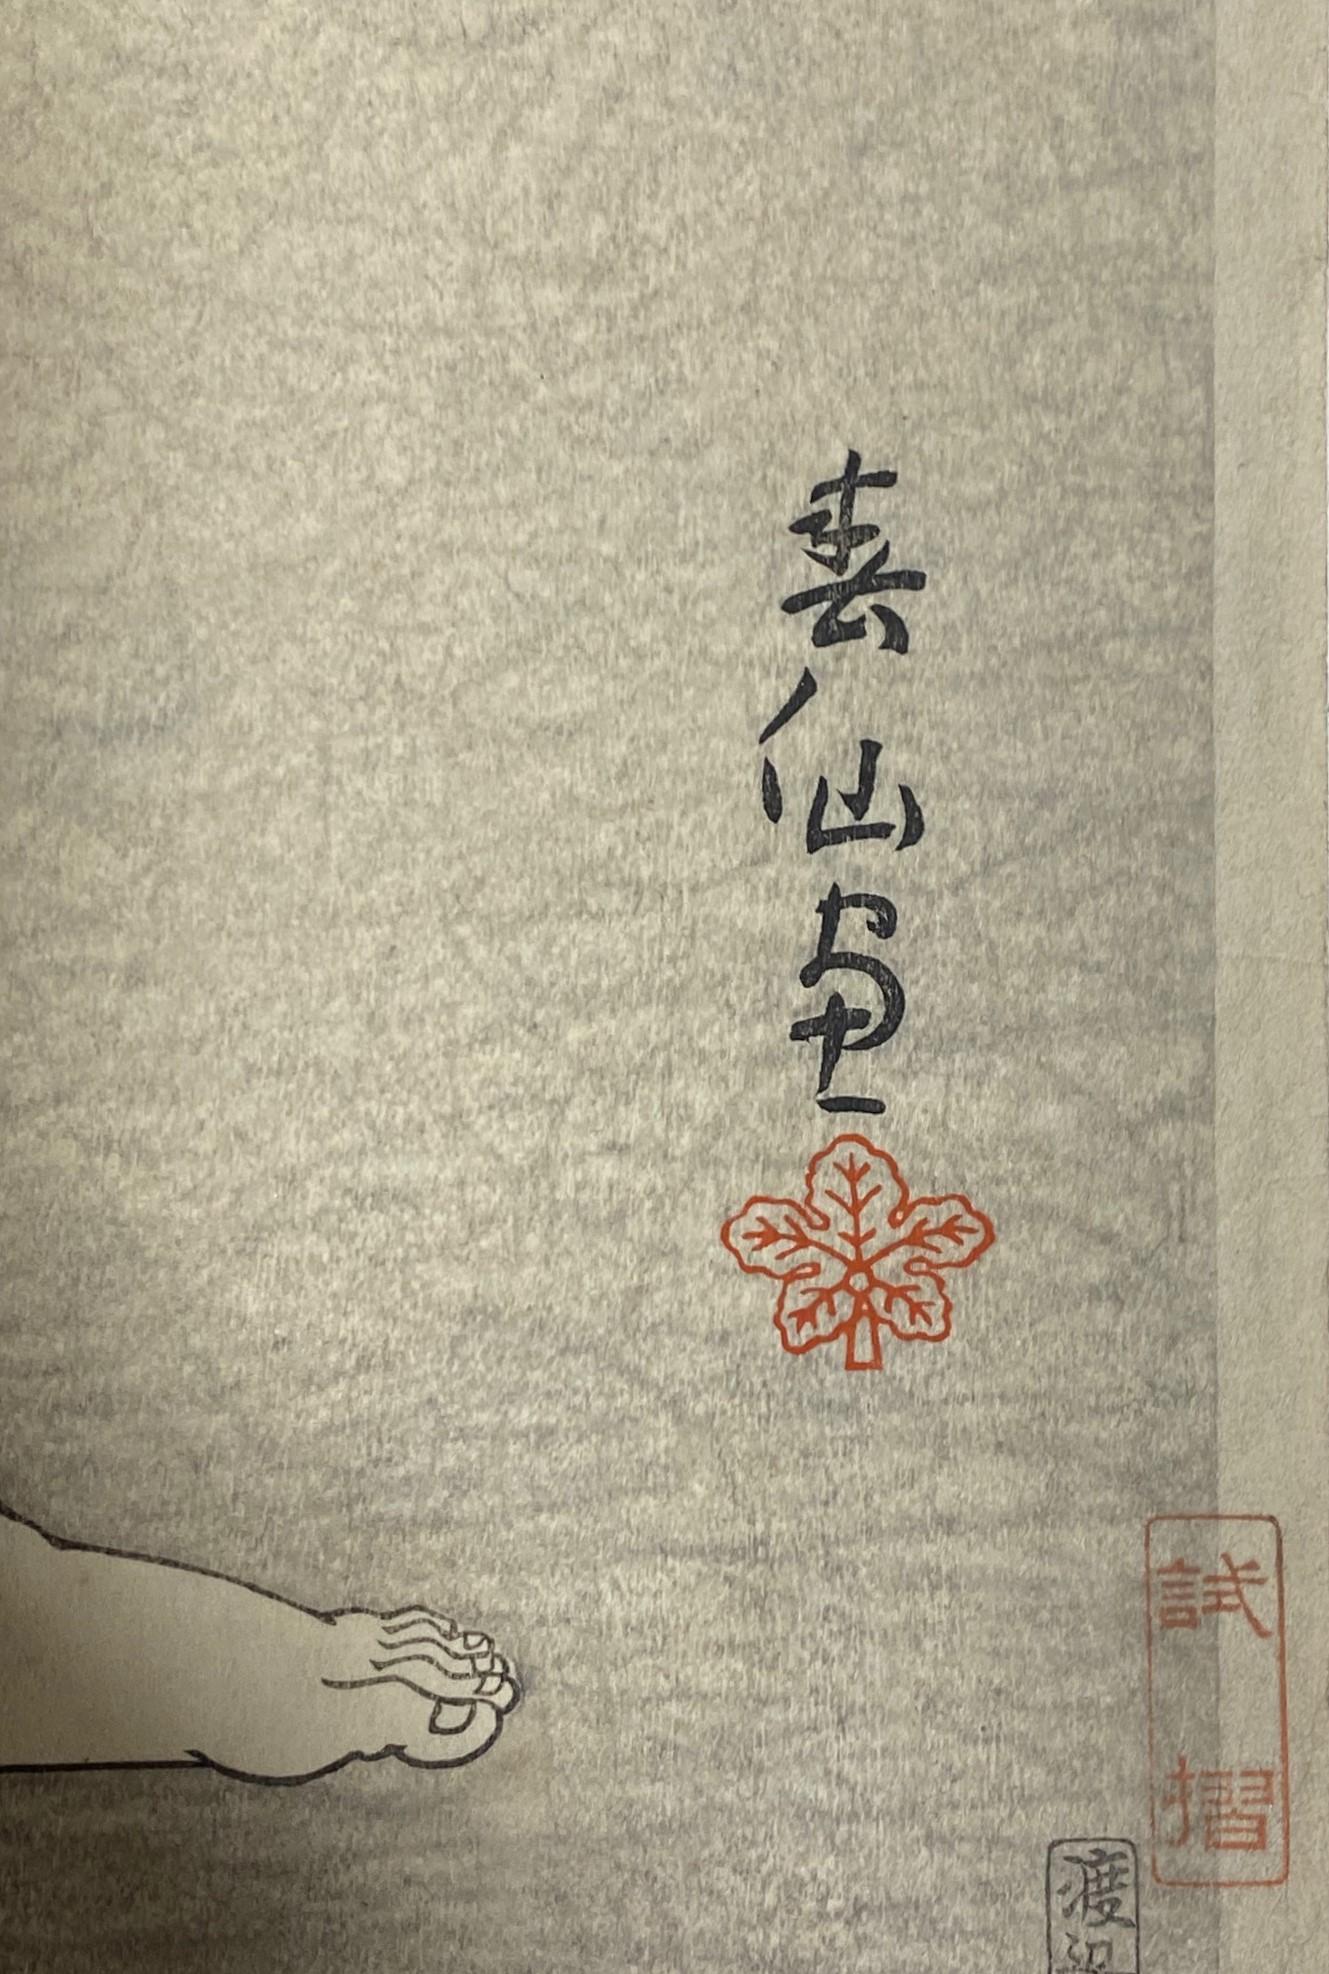 Natori Shunsen Signed Japanese Woodblock Print Onoe Kikugoro VI Adachi Motoemom For Sale 7